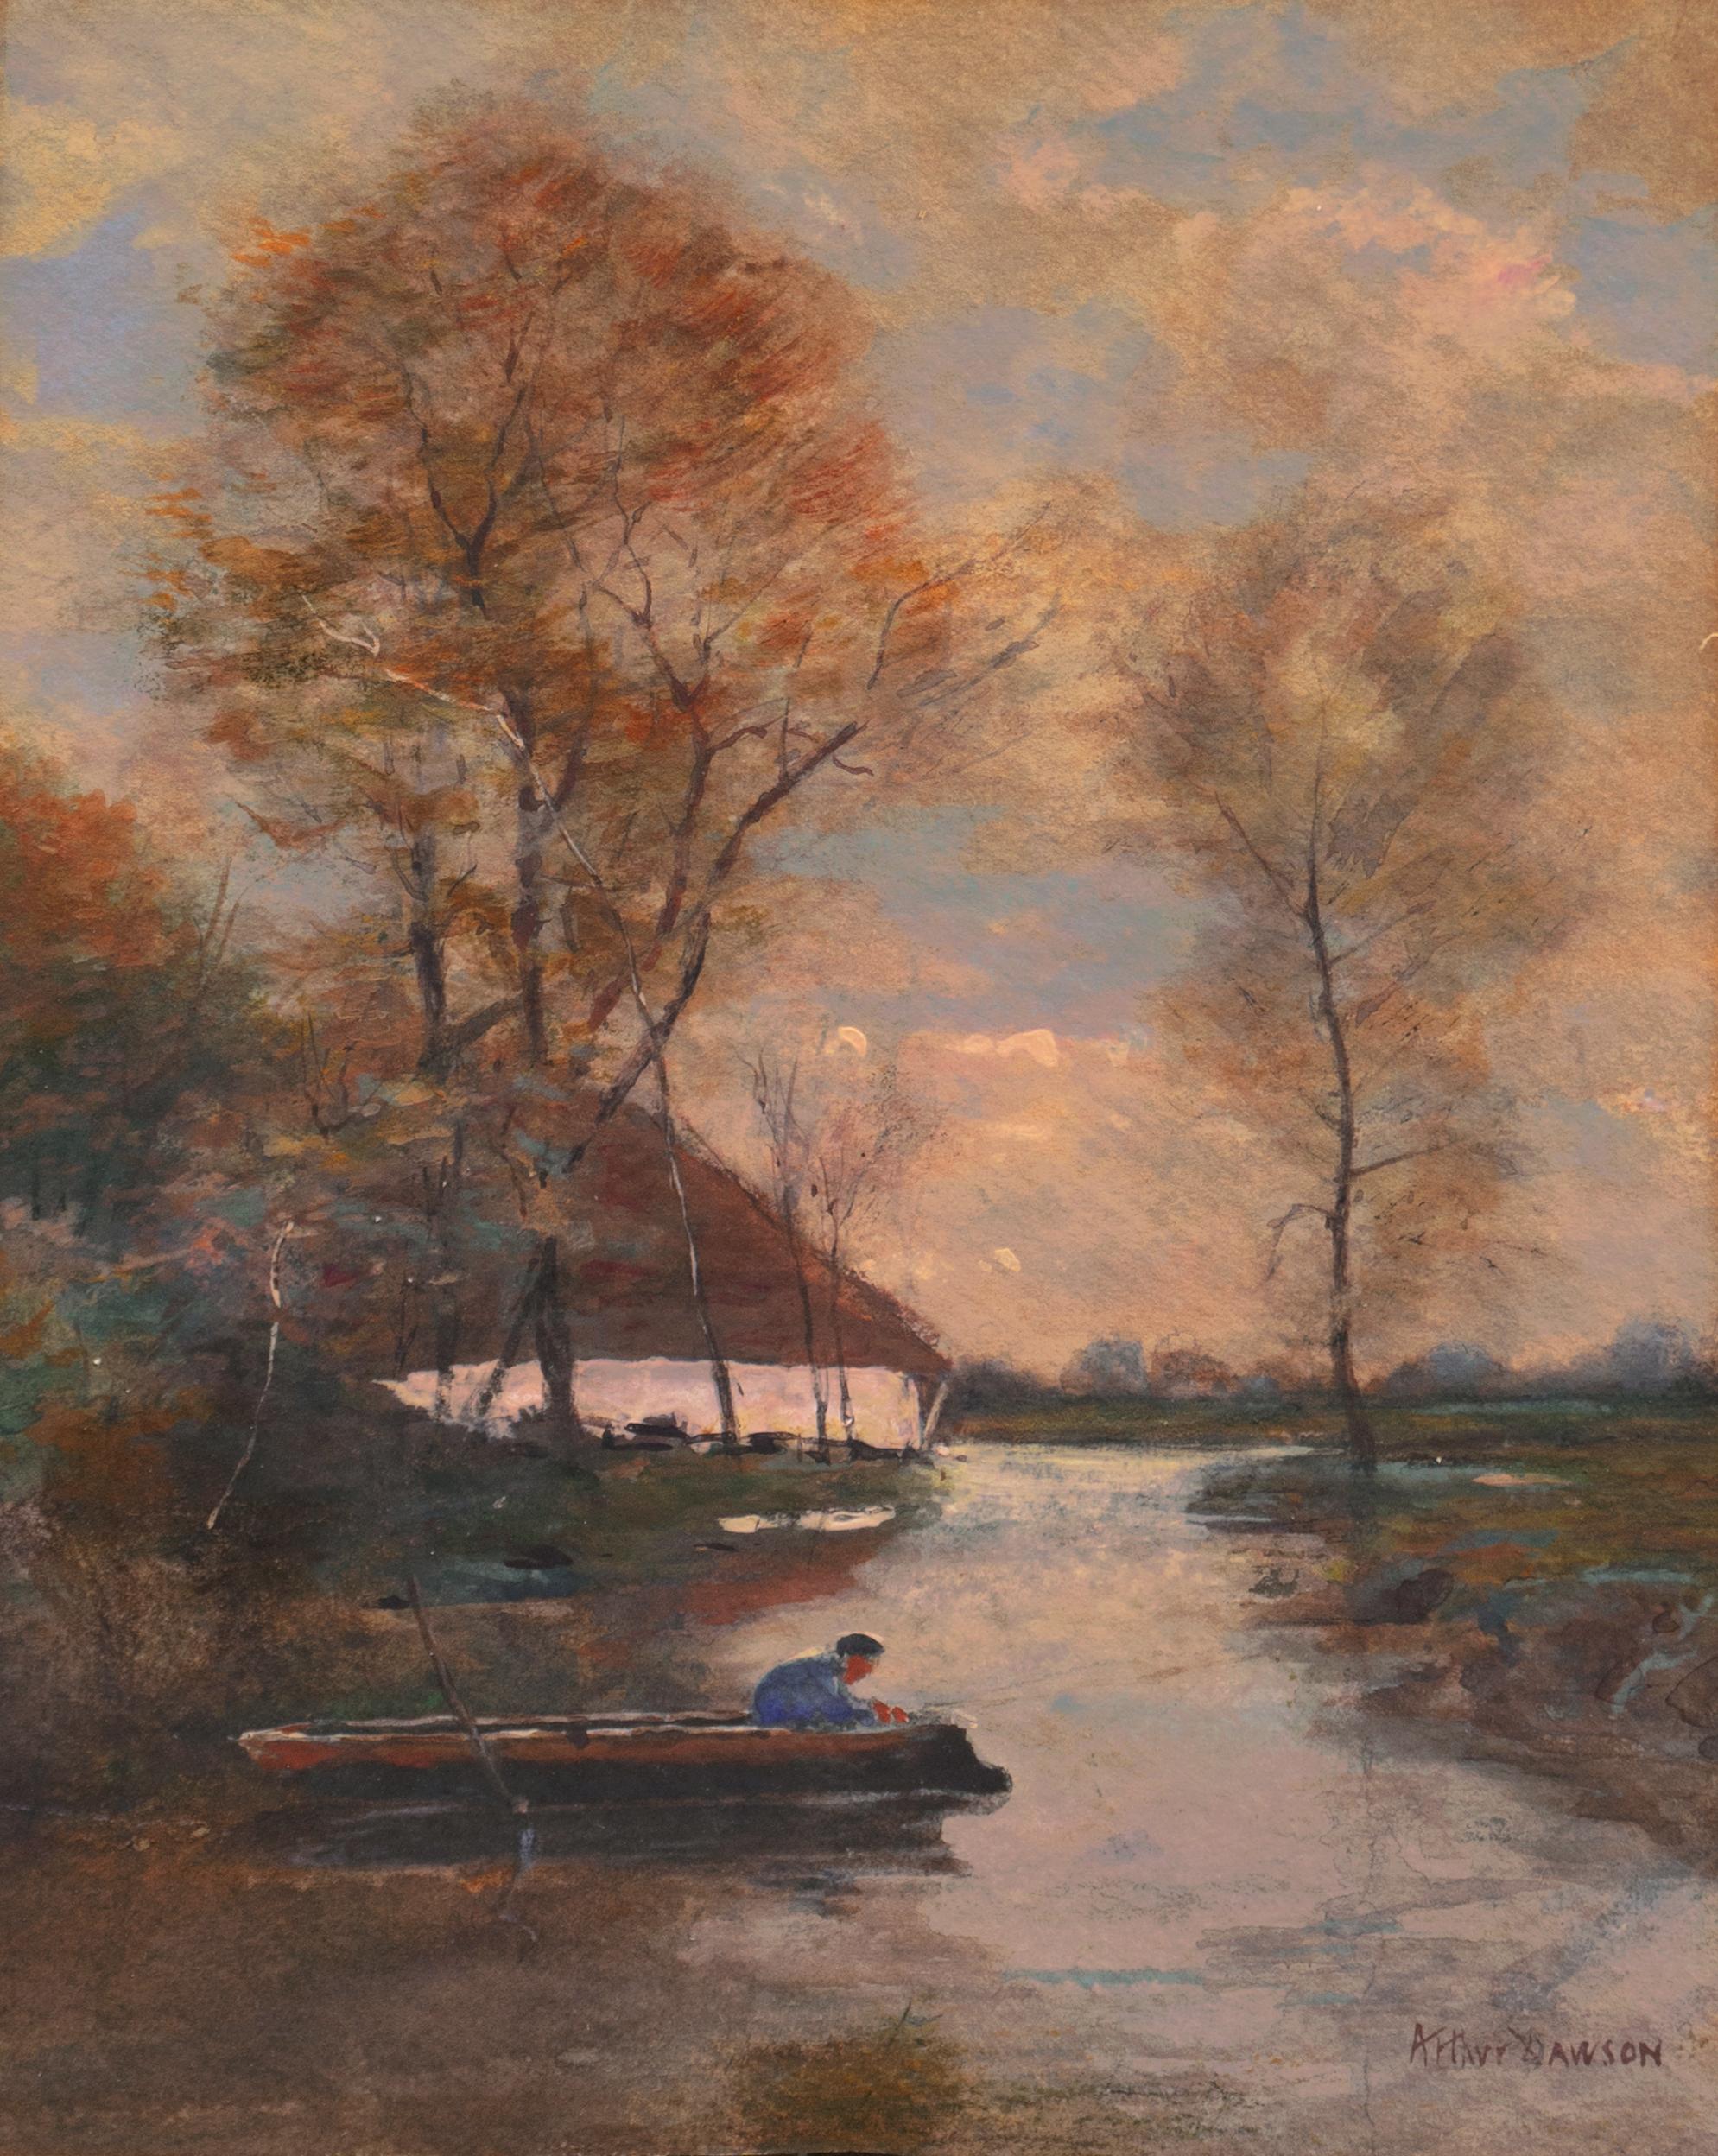 Arthur Dawson Landscape Art – „Evening Fishing“, Sunset River Landscape, Chicago Society of Artists, New York